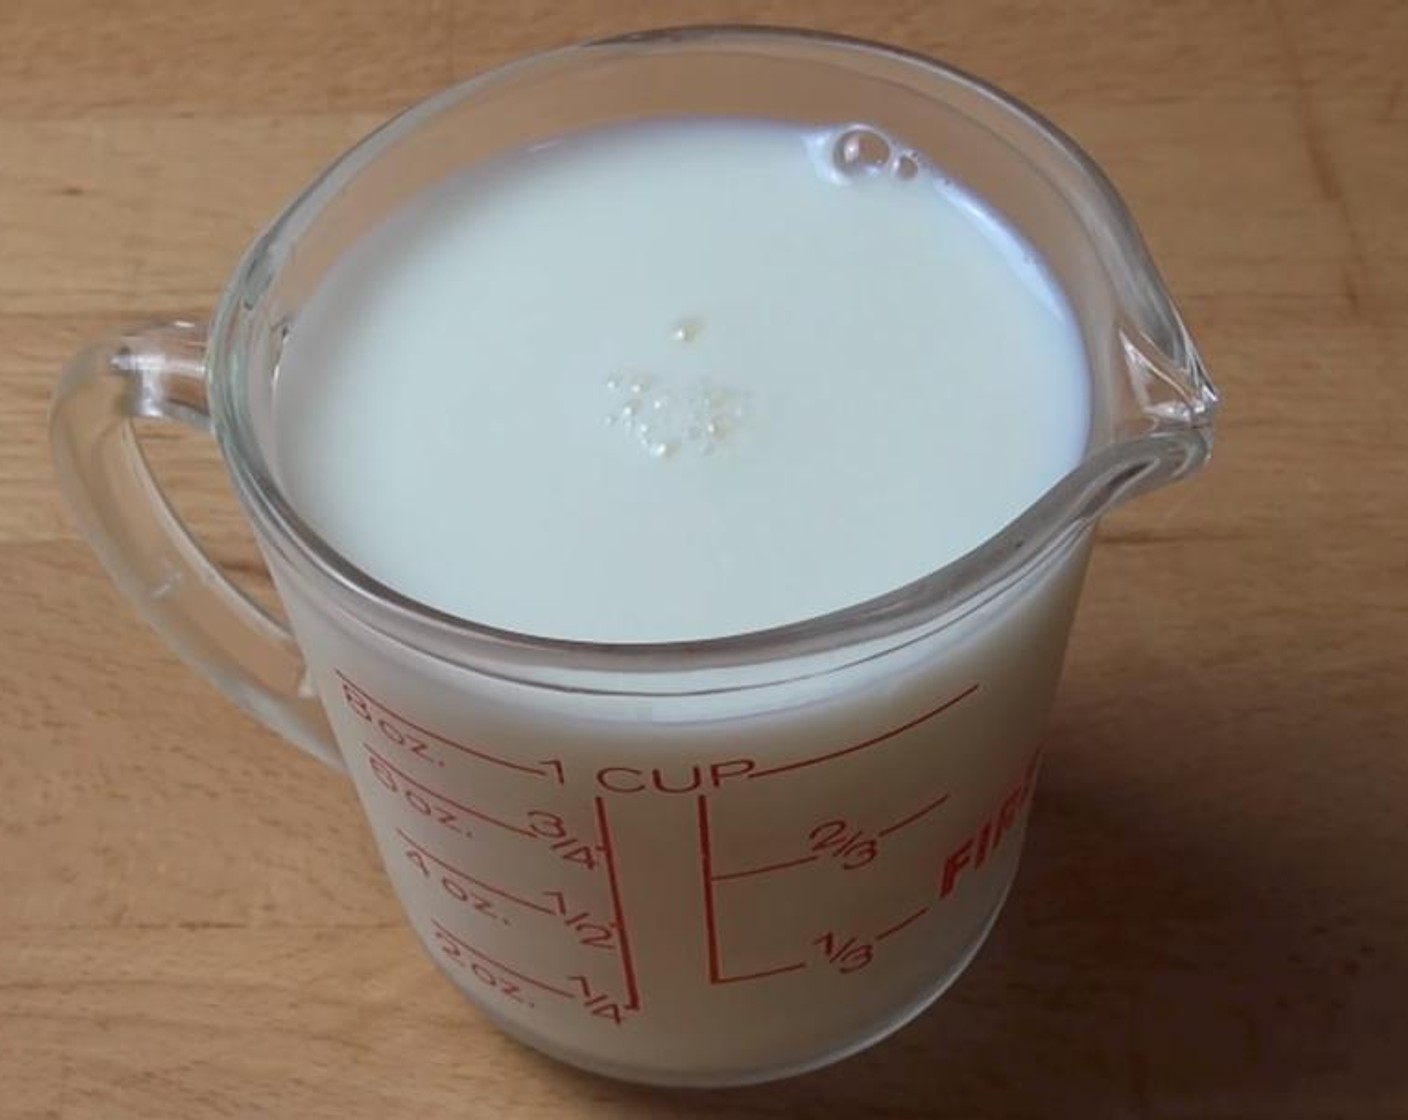 step 1 Put the Distilled White Vinegar (1 Tbsp) into the Milk (1 cup). Stir them together.